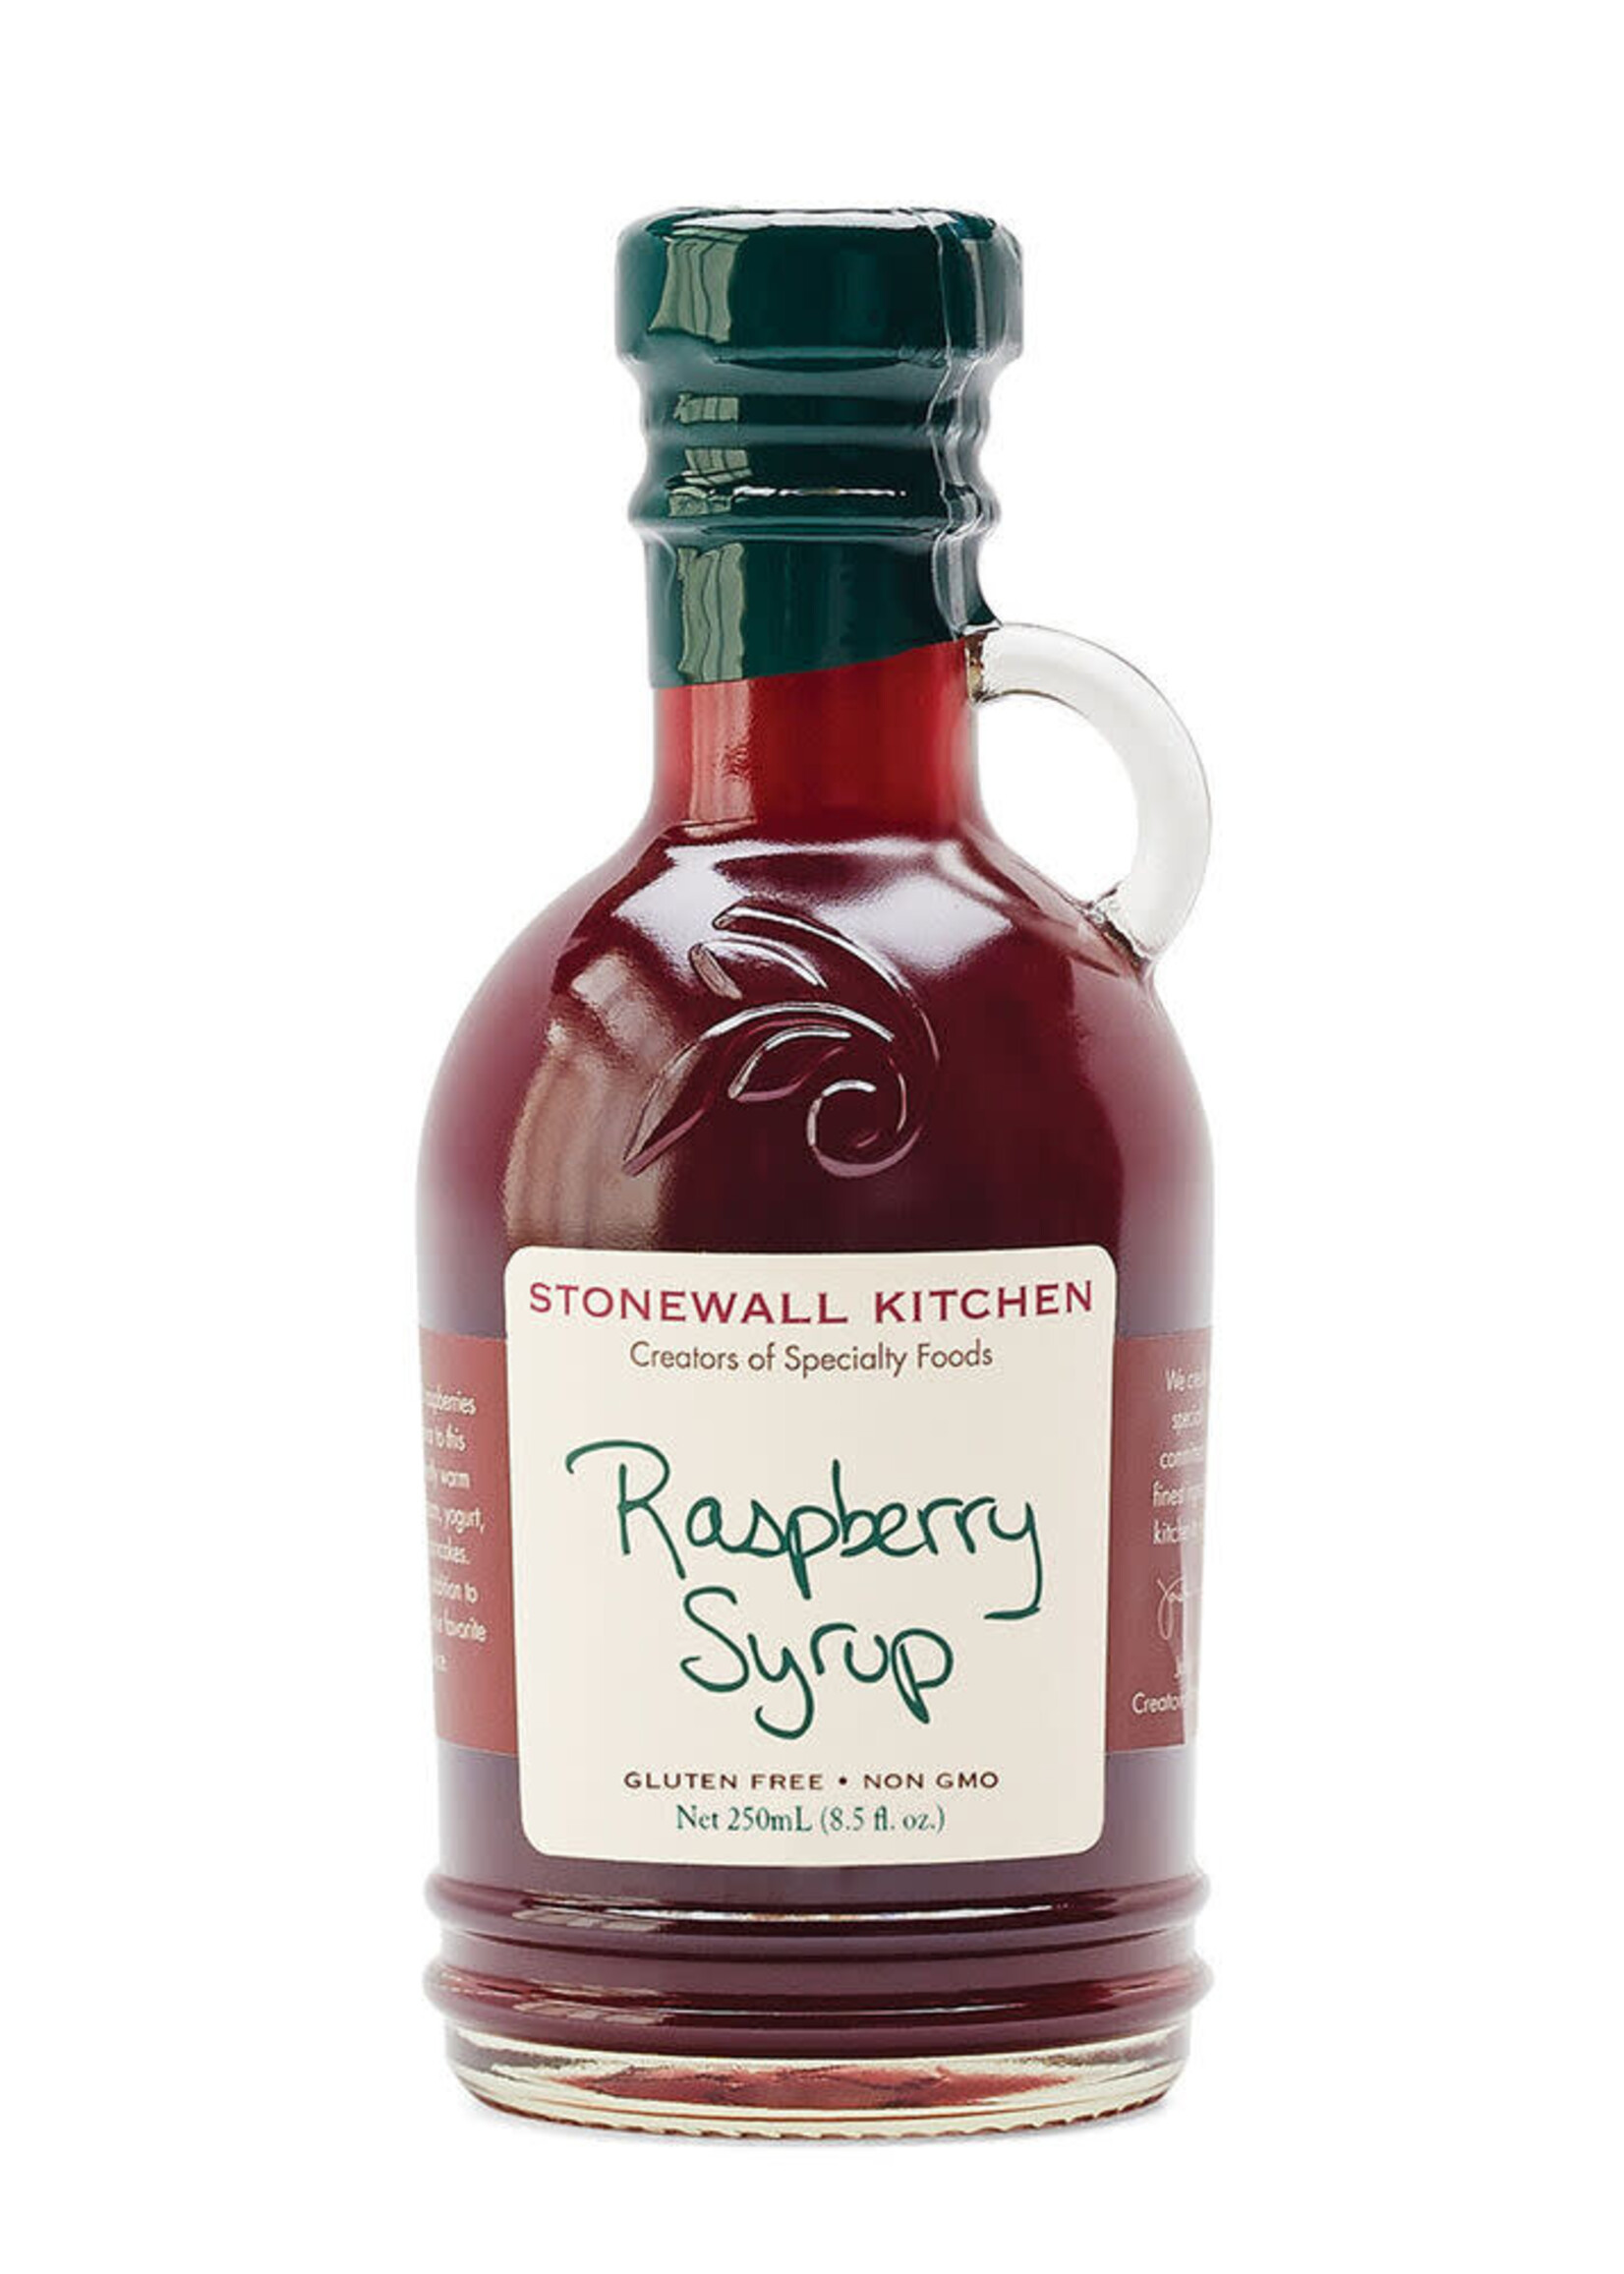 Stonewall Kitchen Stonewall Kitchen - Raspberry Syrup 8.5 fl oz - 170804